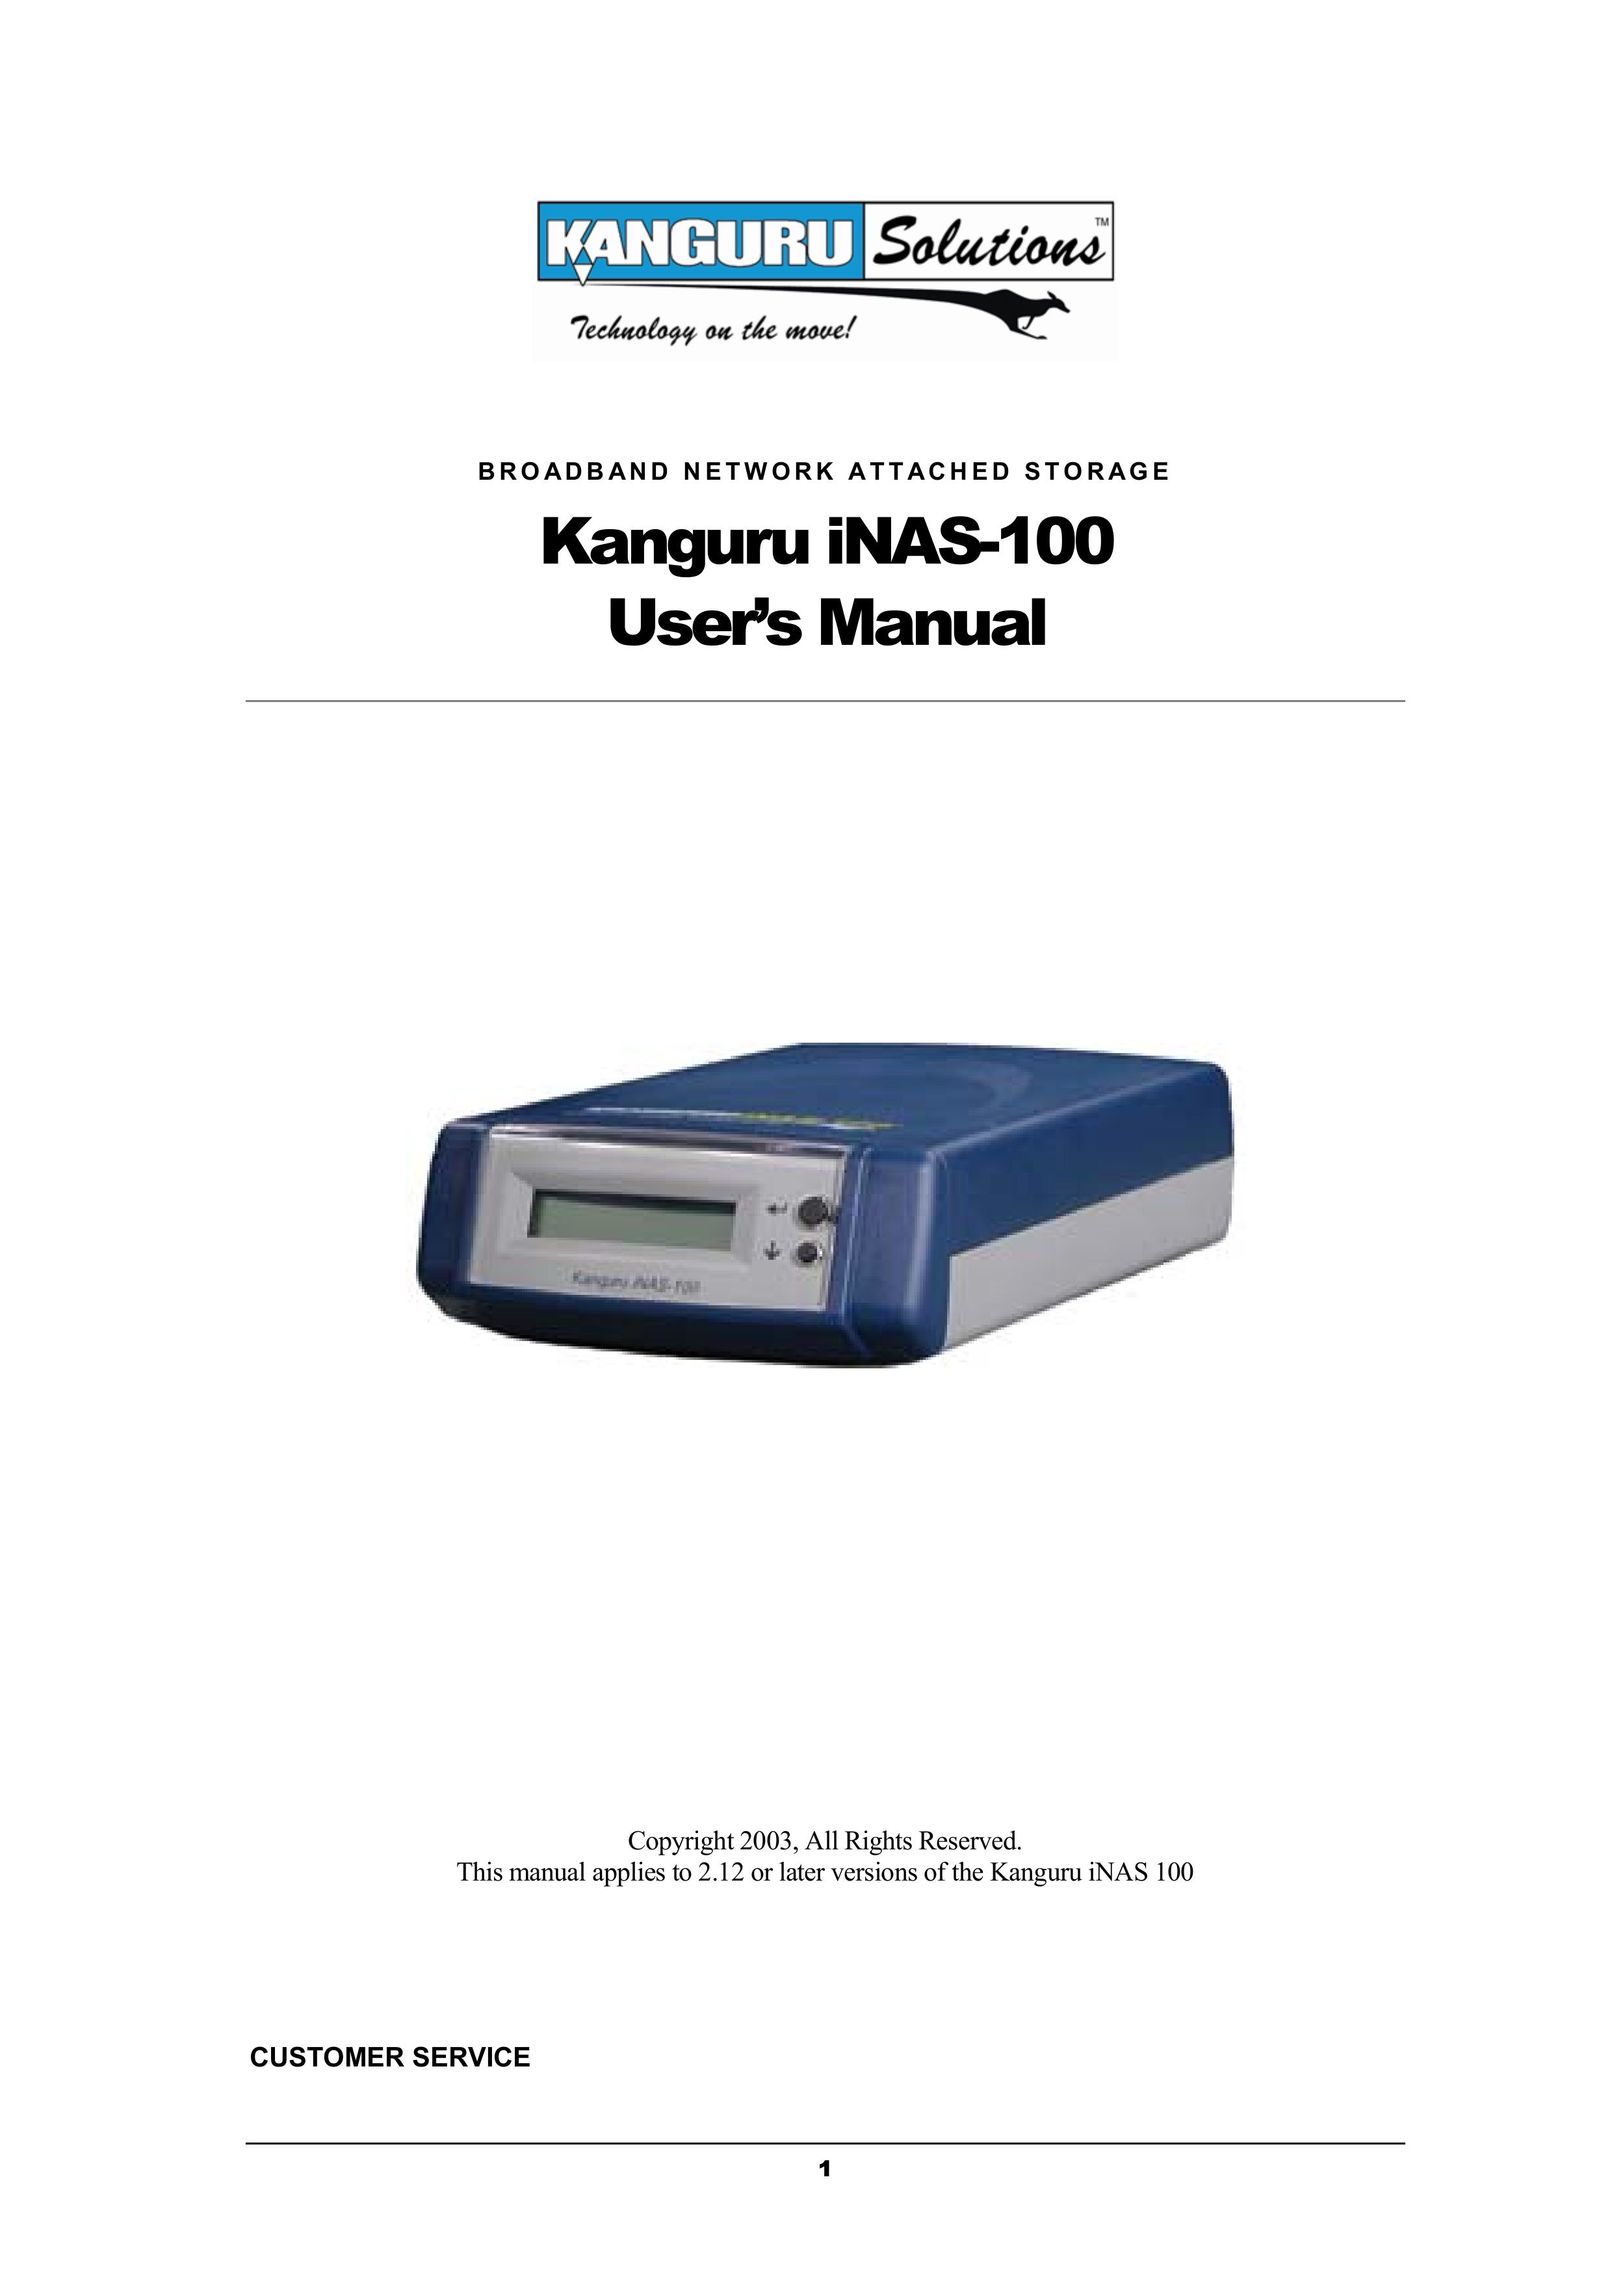 Kanguru Solutions iNAS-100 Network Router User Manual